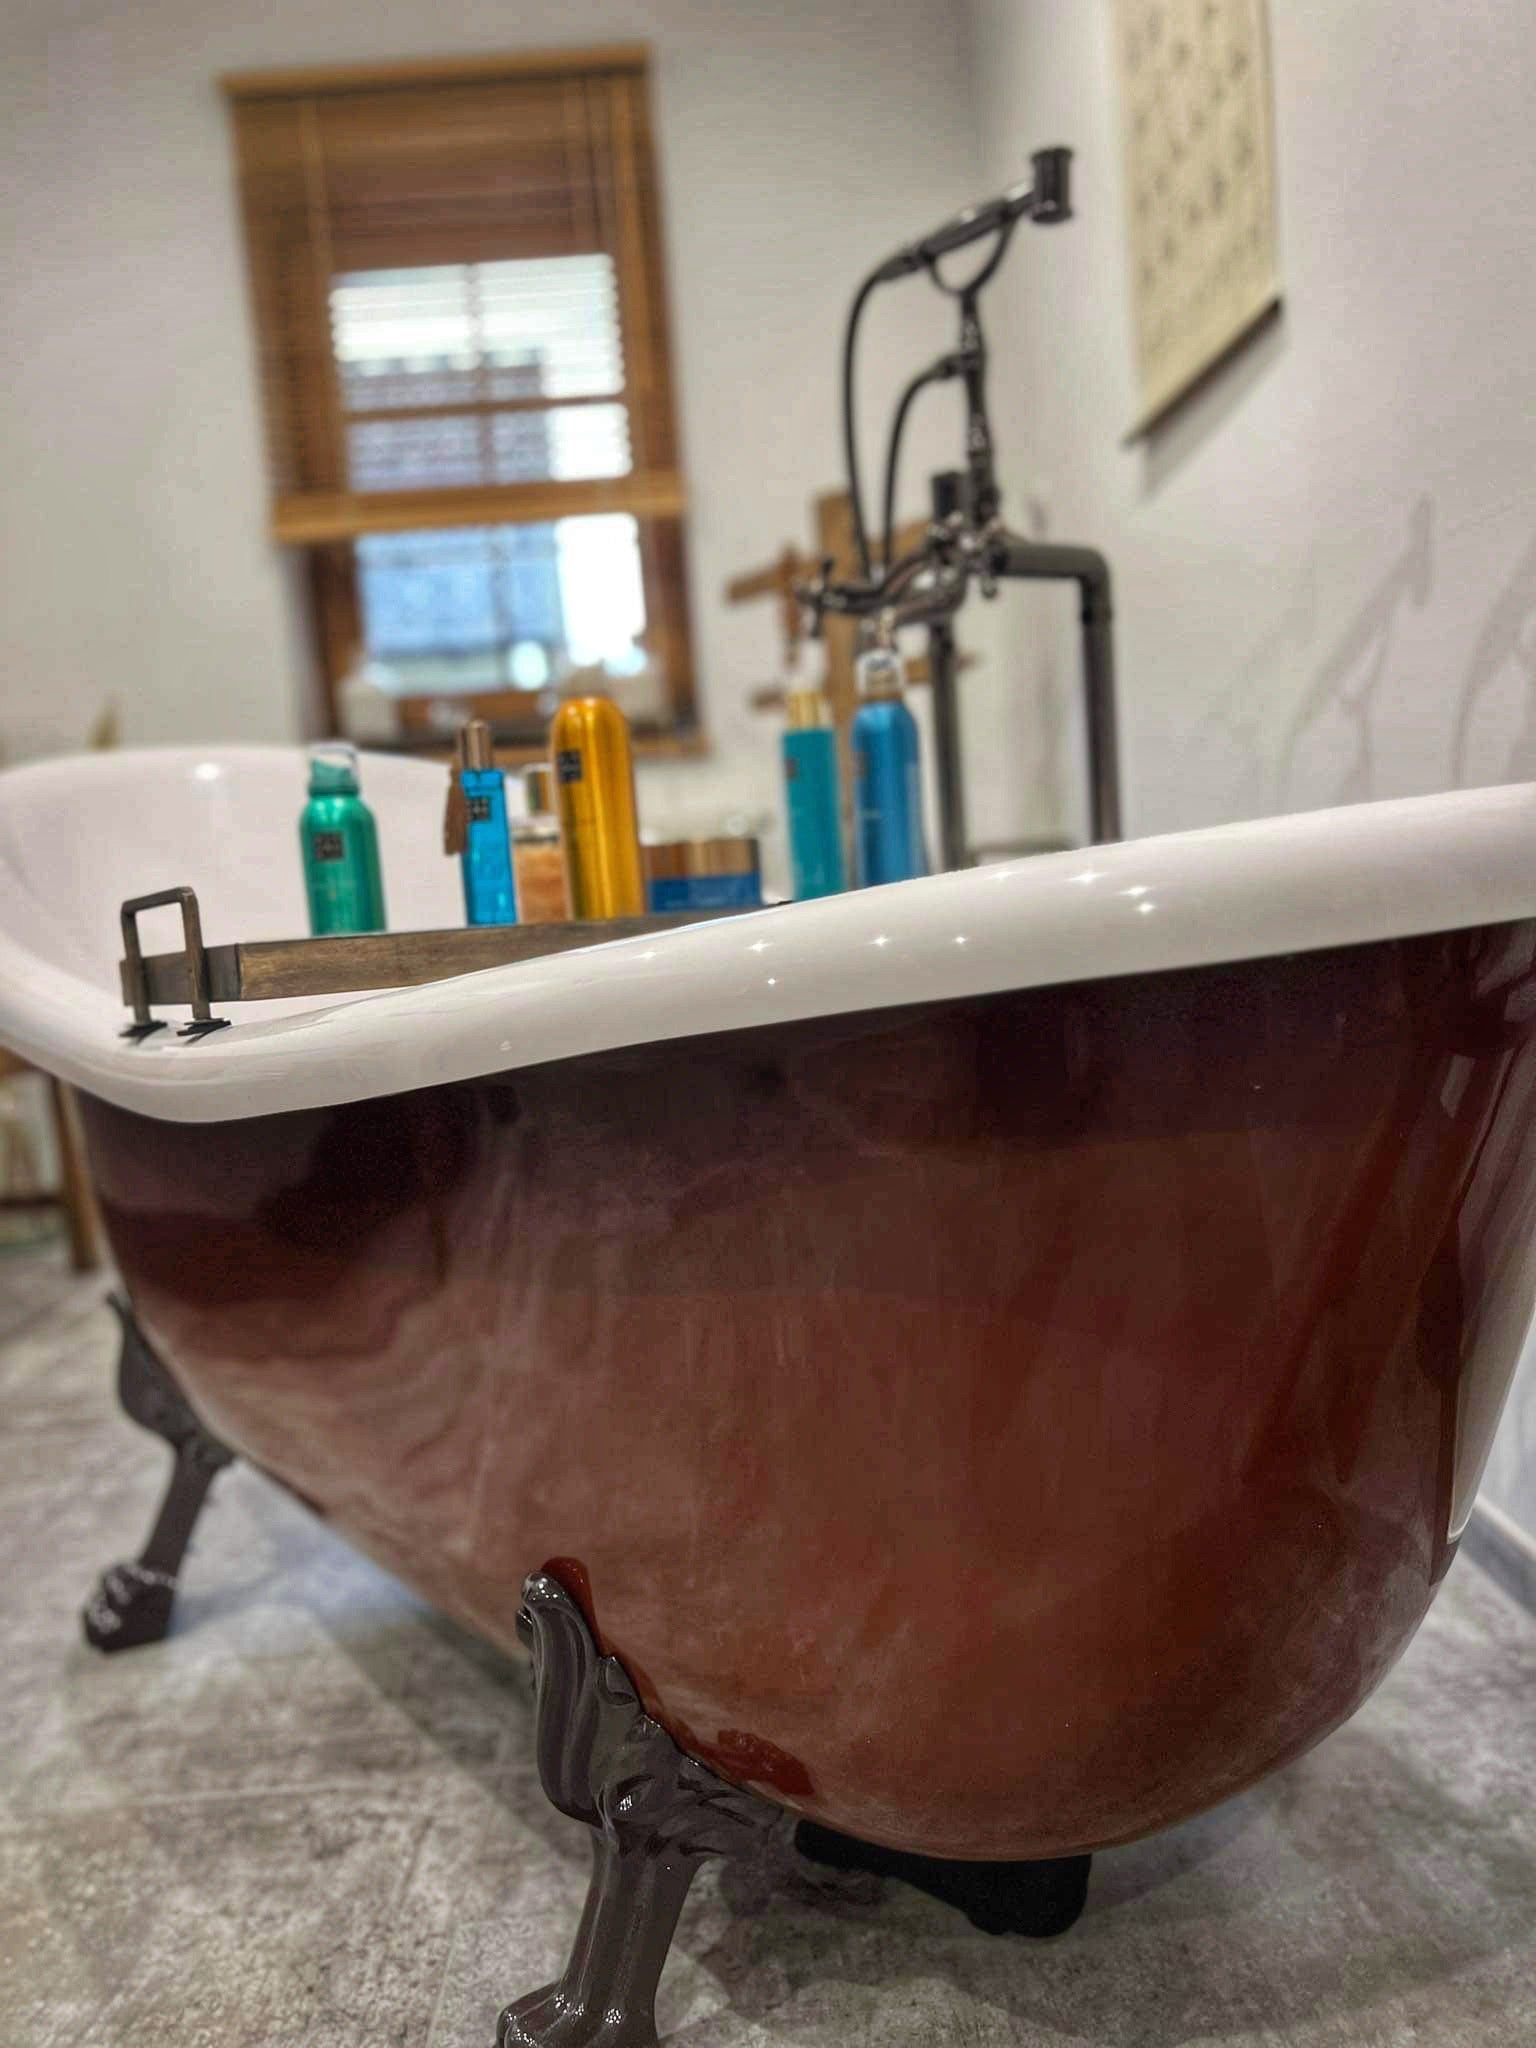 Luxury Freestanding Bathtub Faucet Deira Oil Rubbed Bronze - |VESIMI Design|